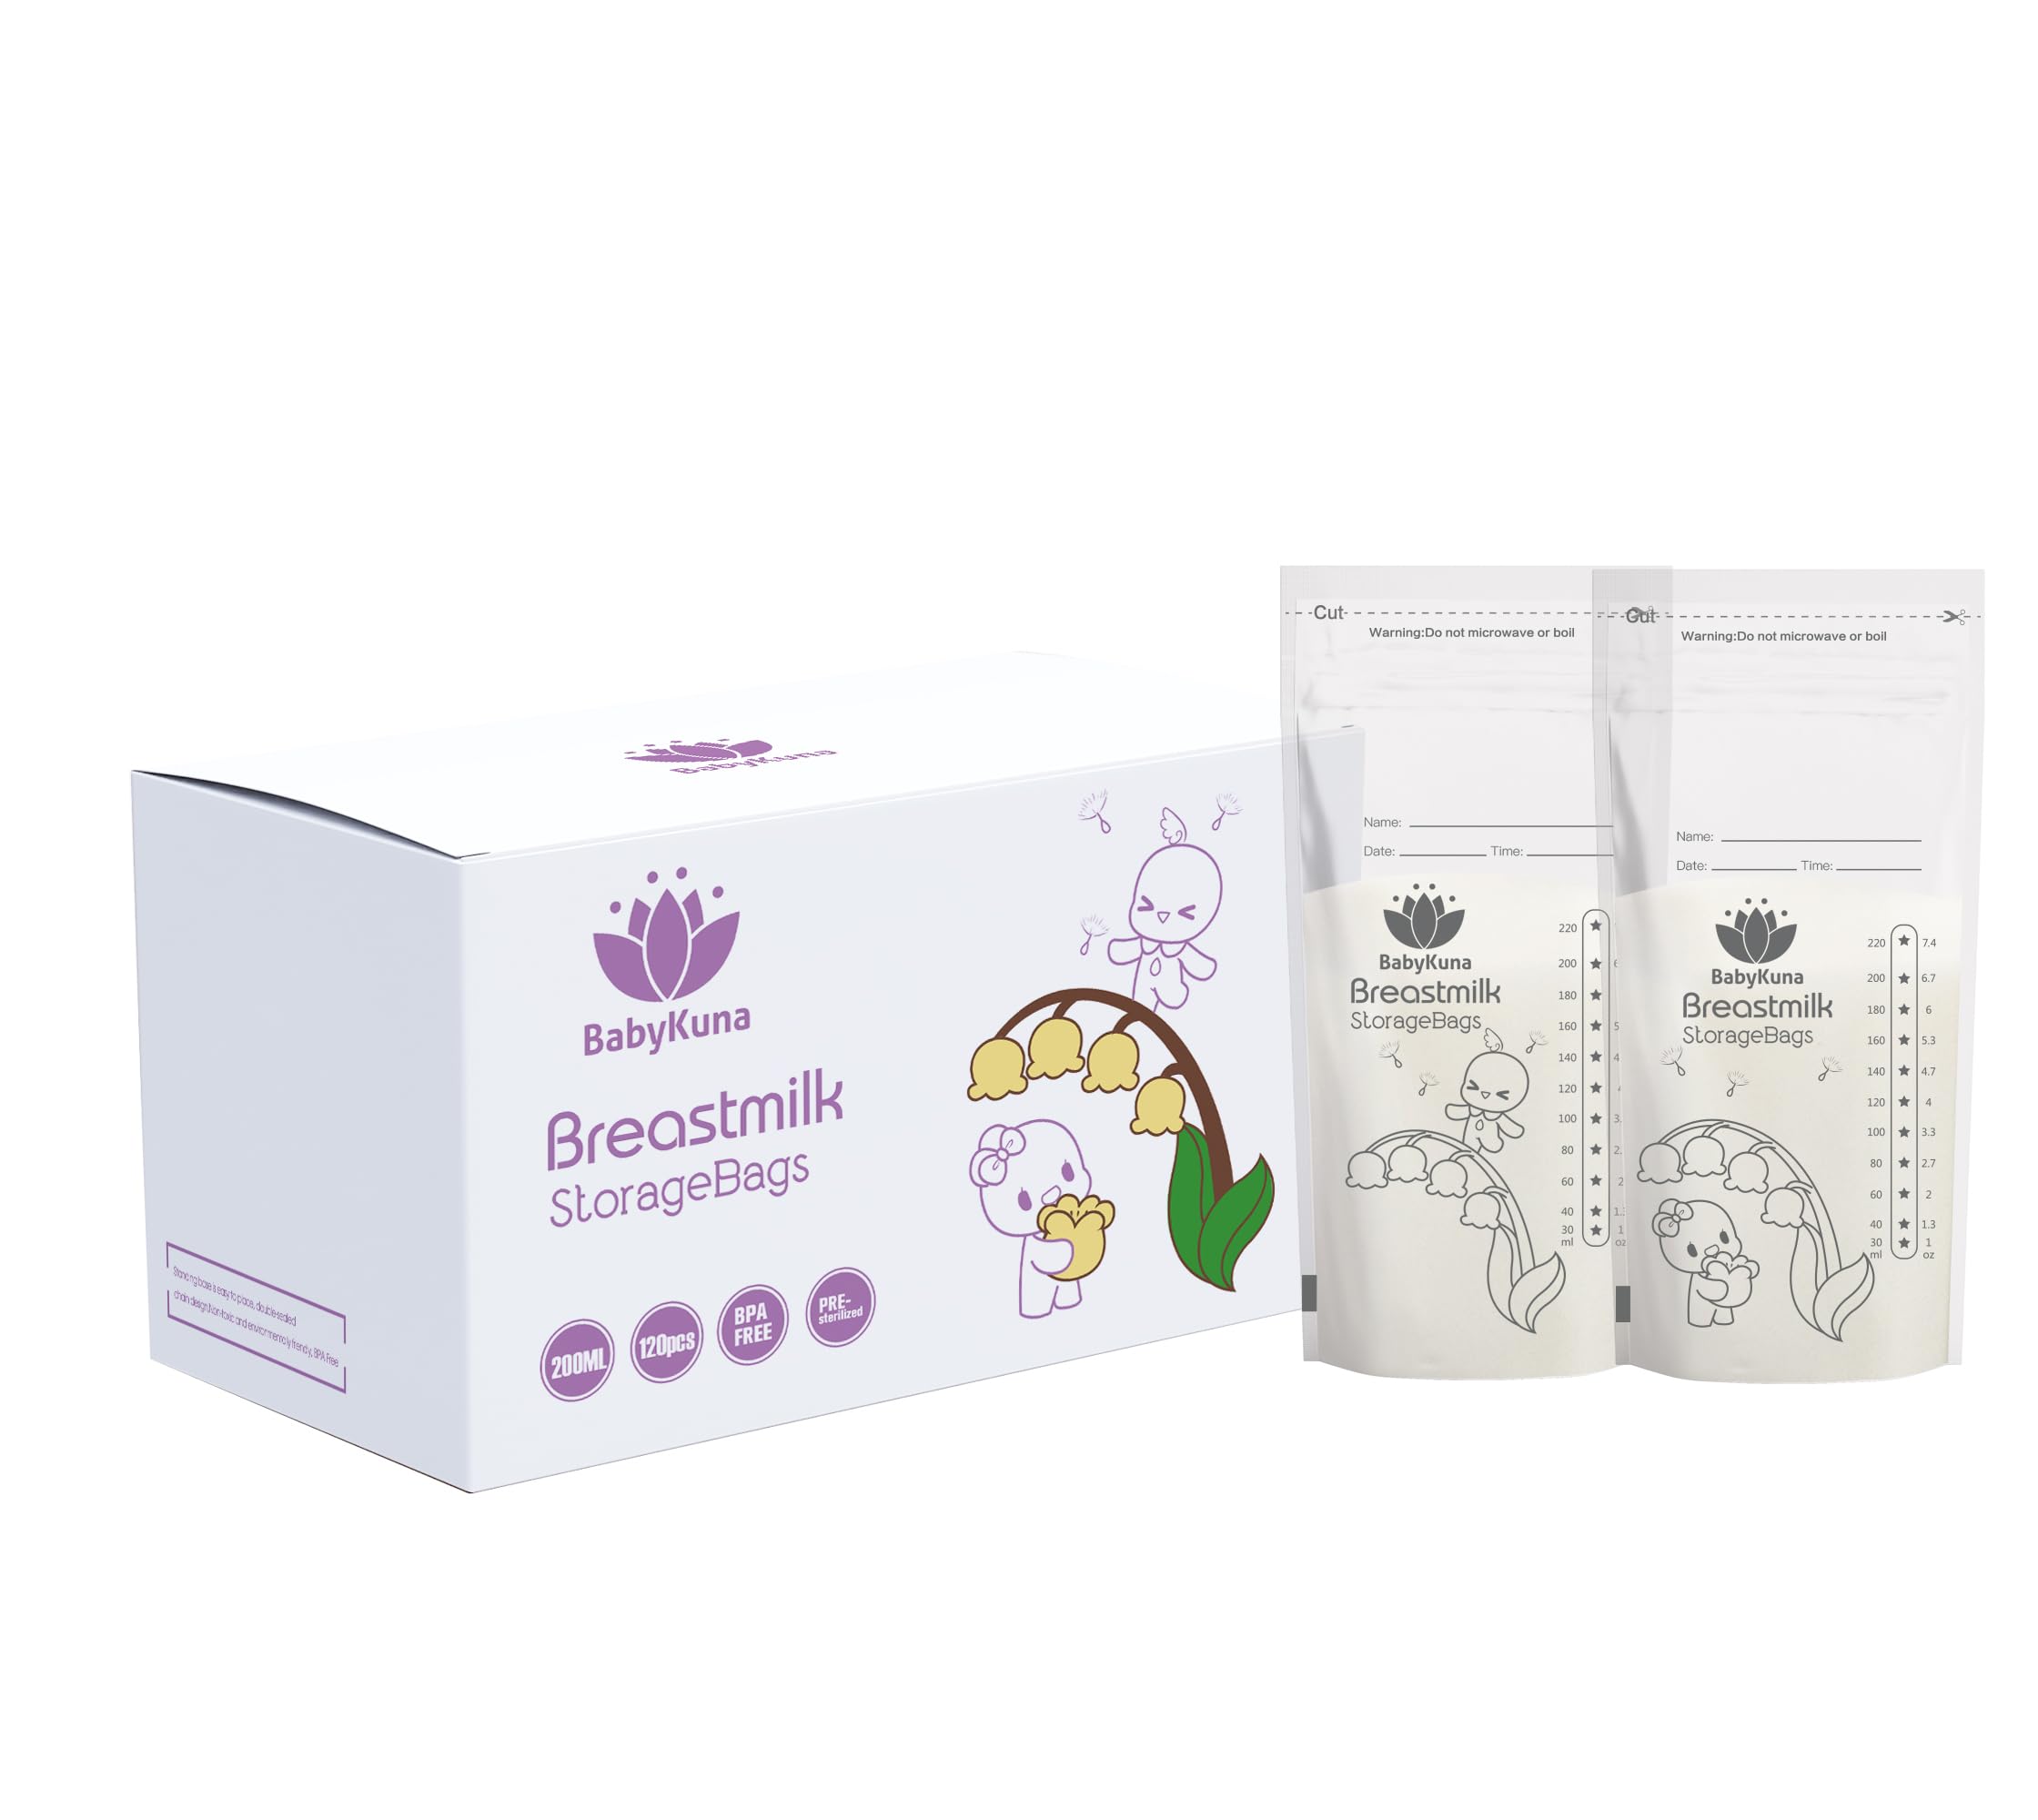 Babykuna Premium Breast Milk Storage Bags - 120-Pack, 220ml, Double Zipper, Self-Standing, Leak-Proof, Pre-Sealed